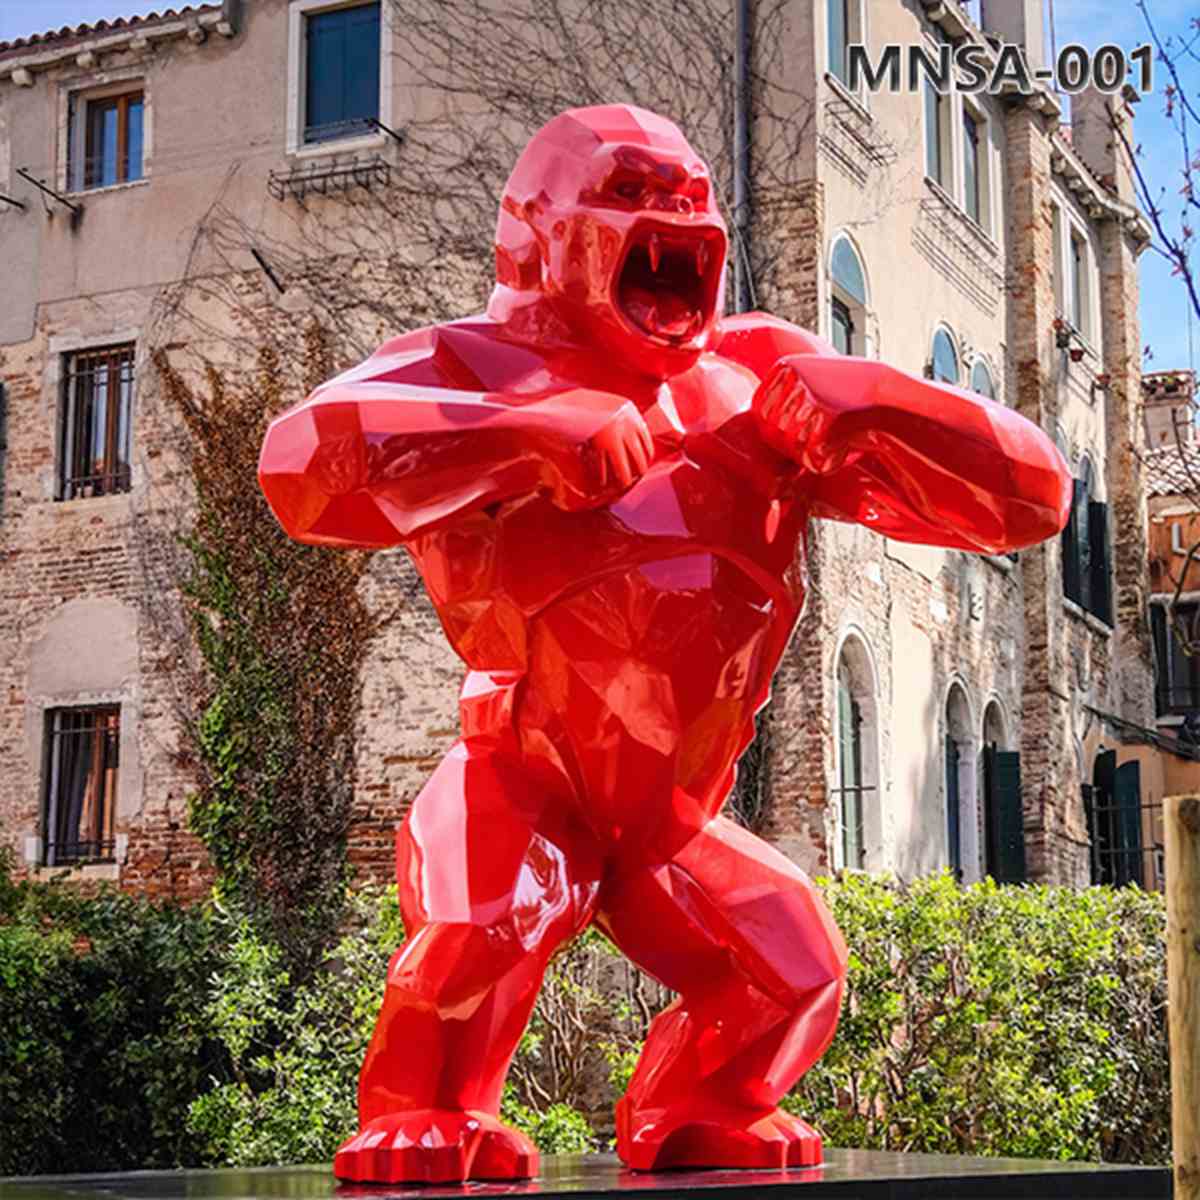 Geometric Colorful Large Metal Gorilla Statue - YouFine Sculpture